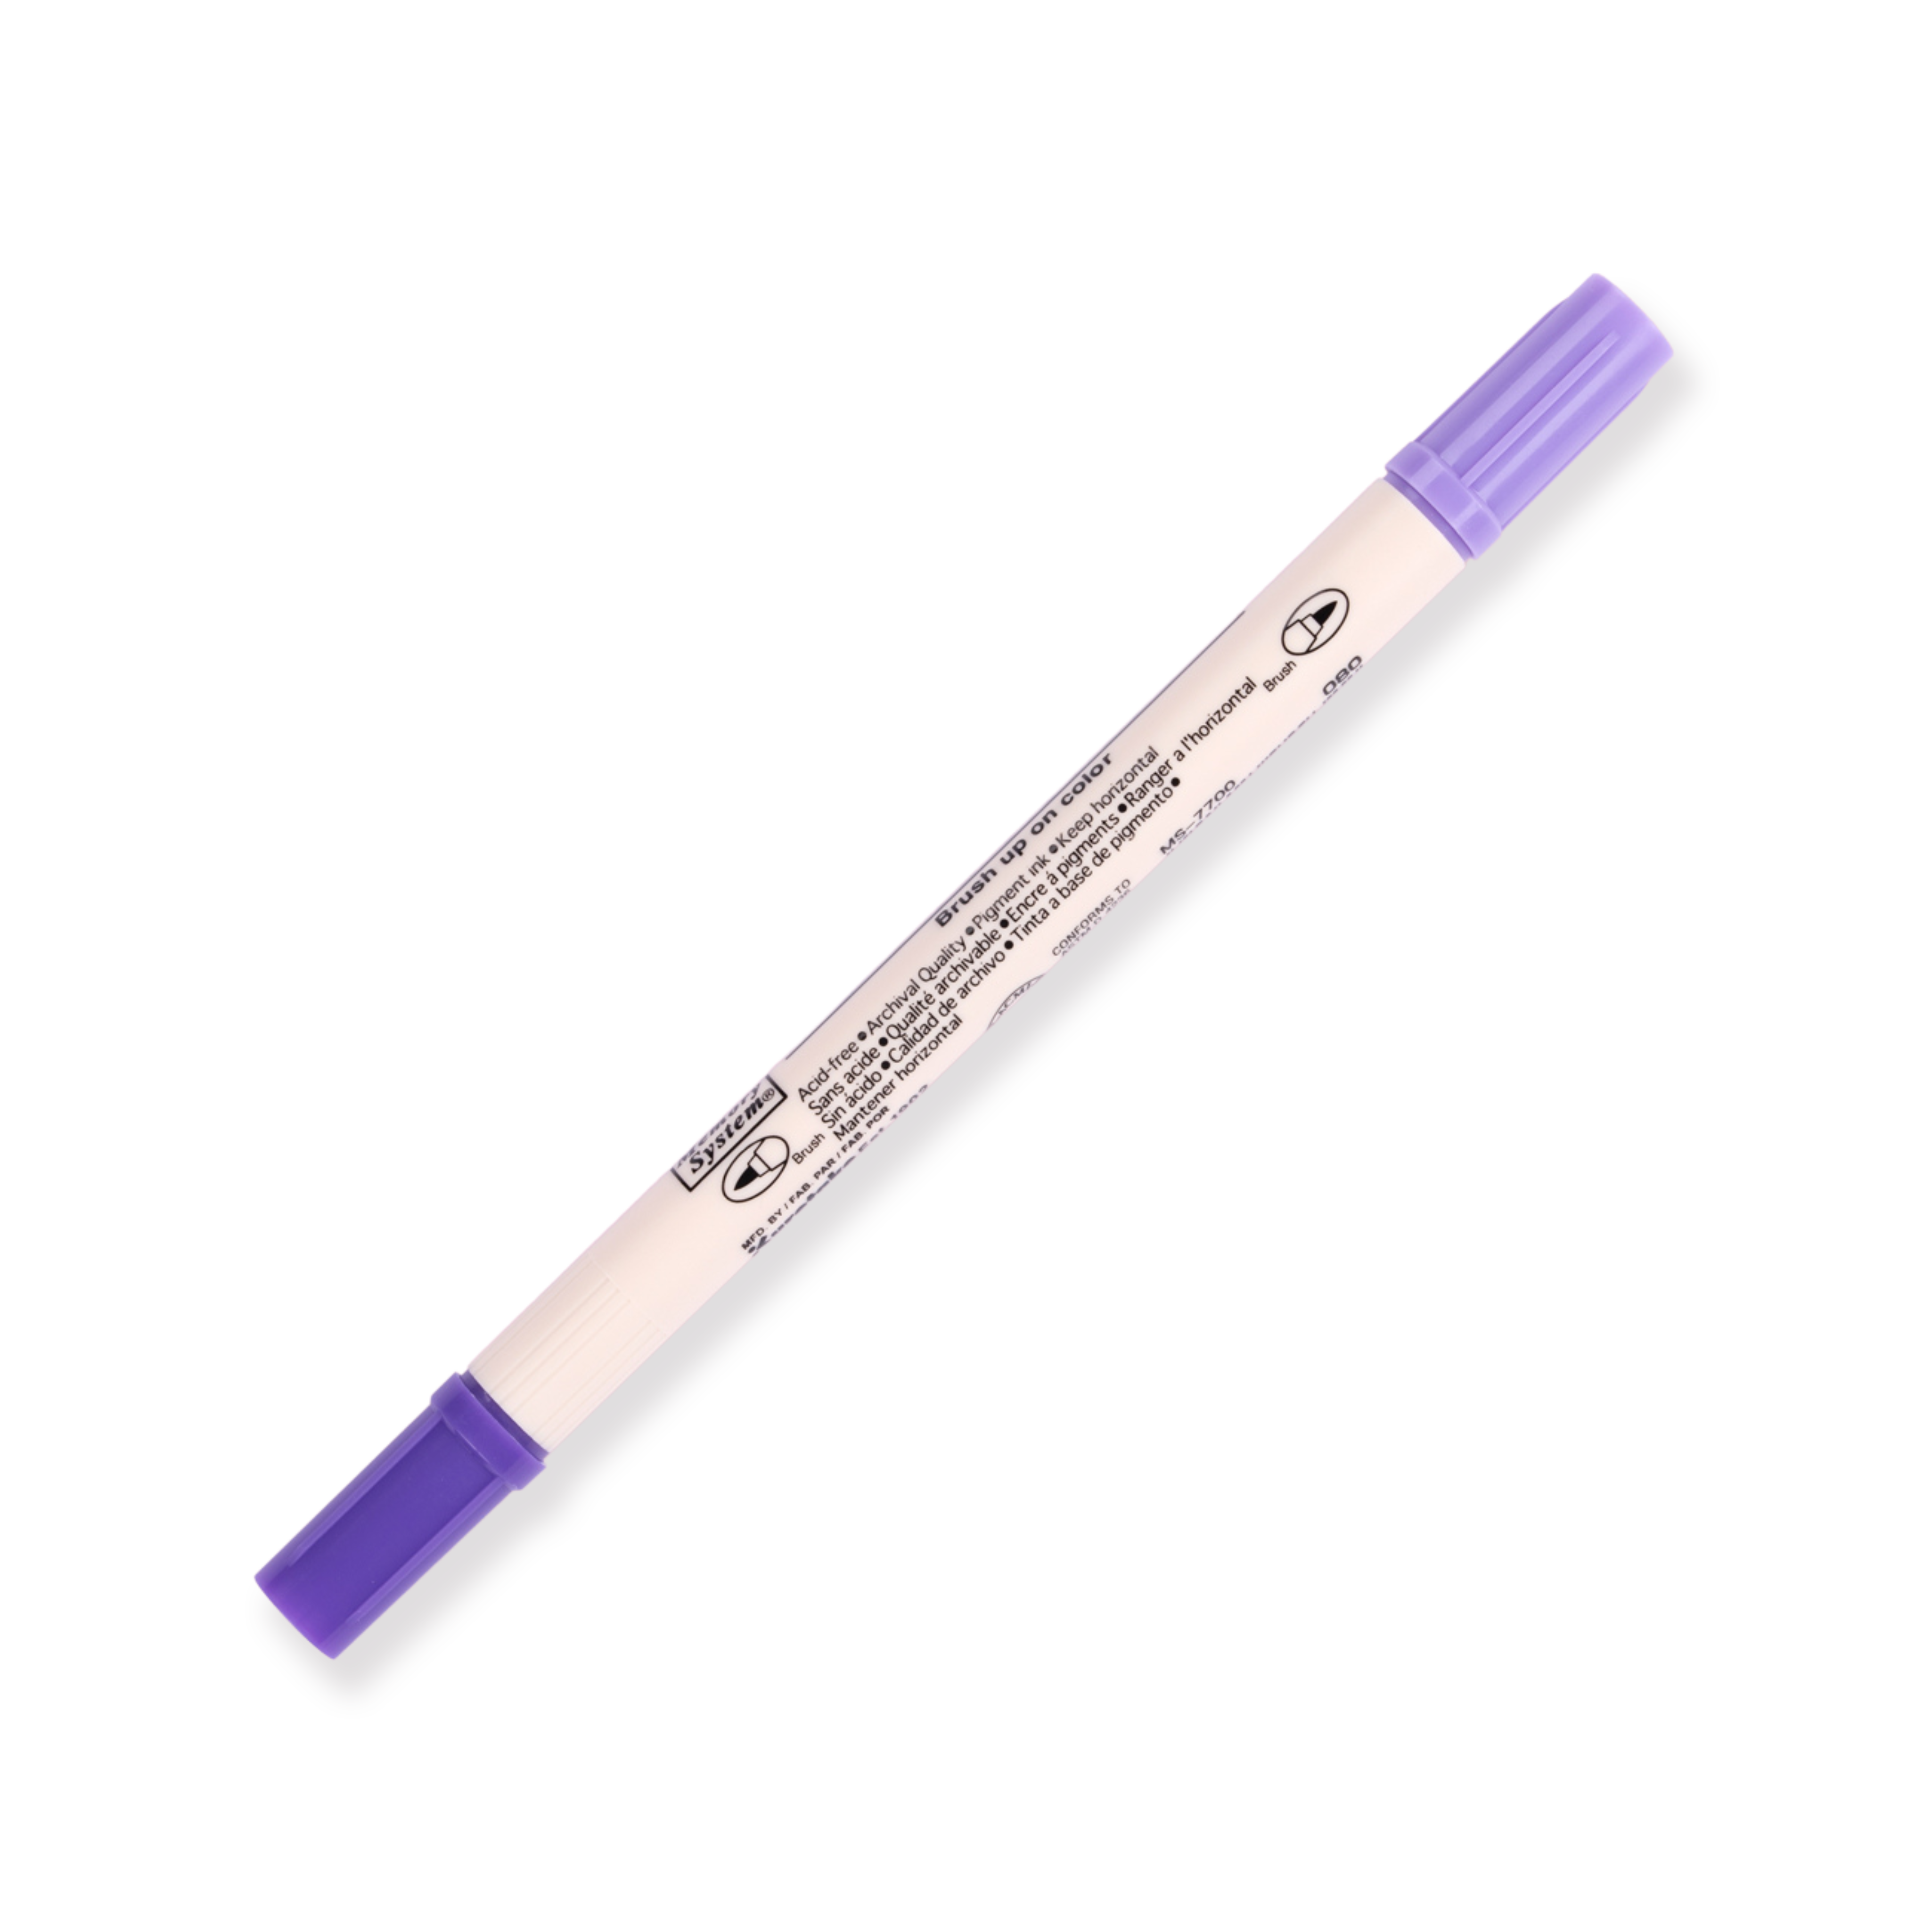 Kuretake Zig Brushables Brush Pen - Pure Violet 080